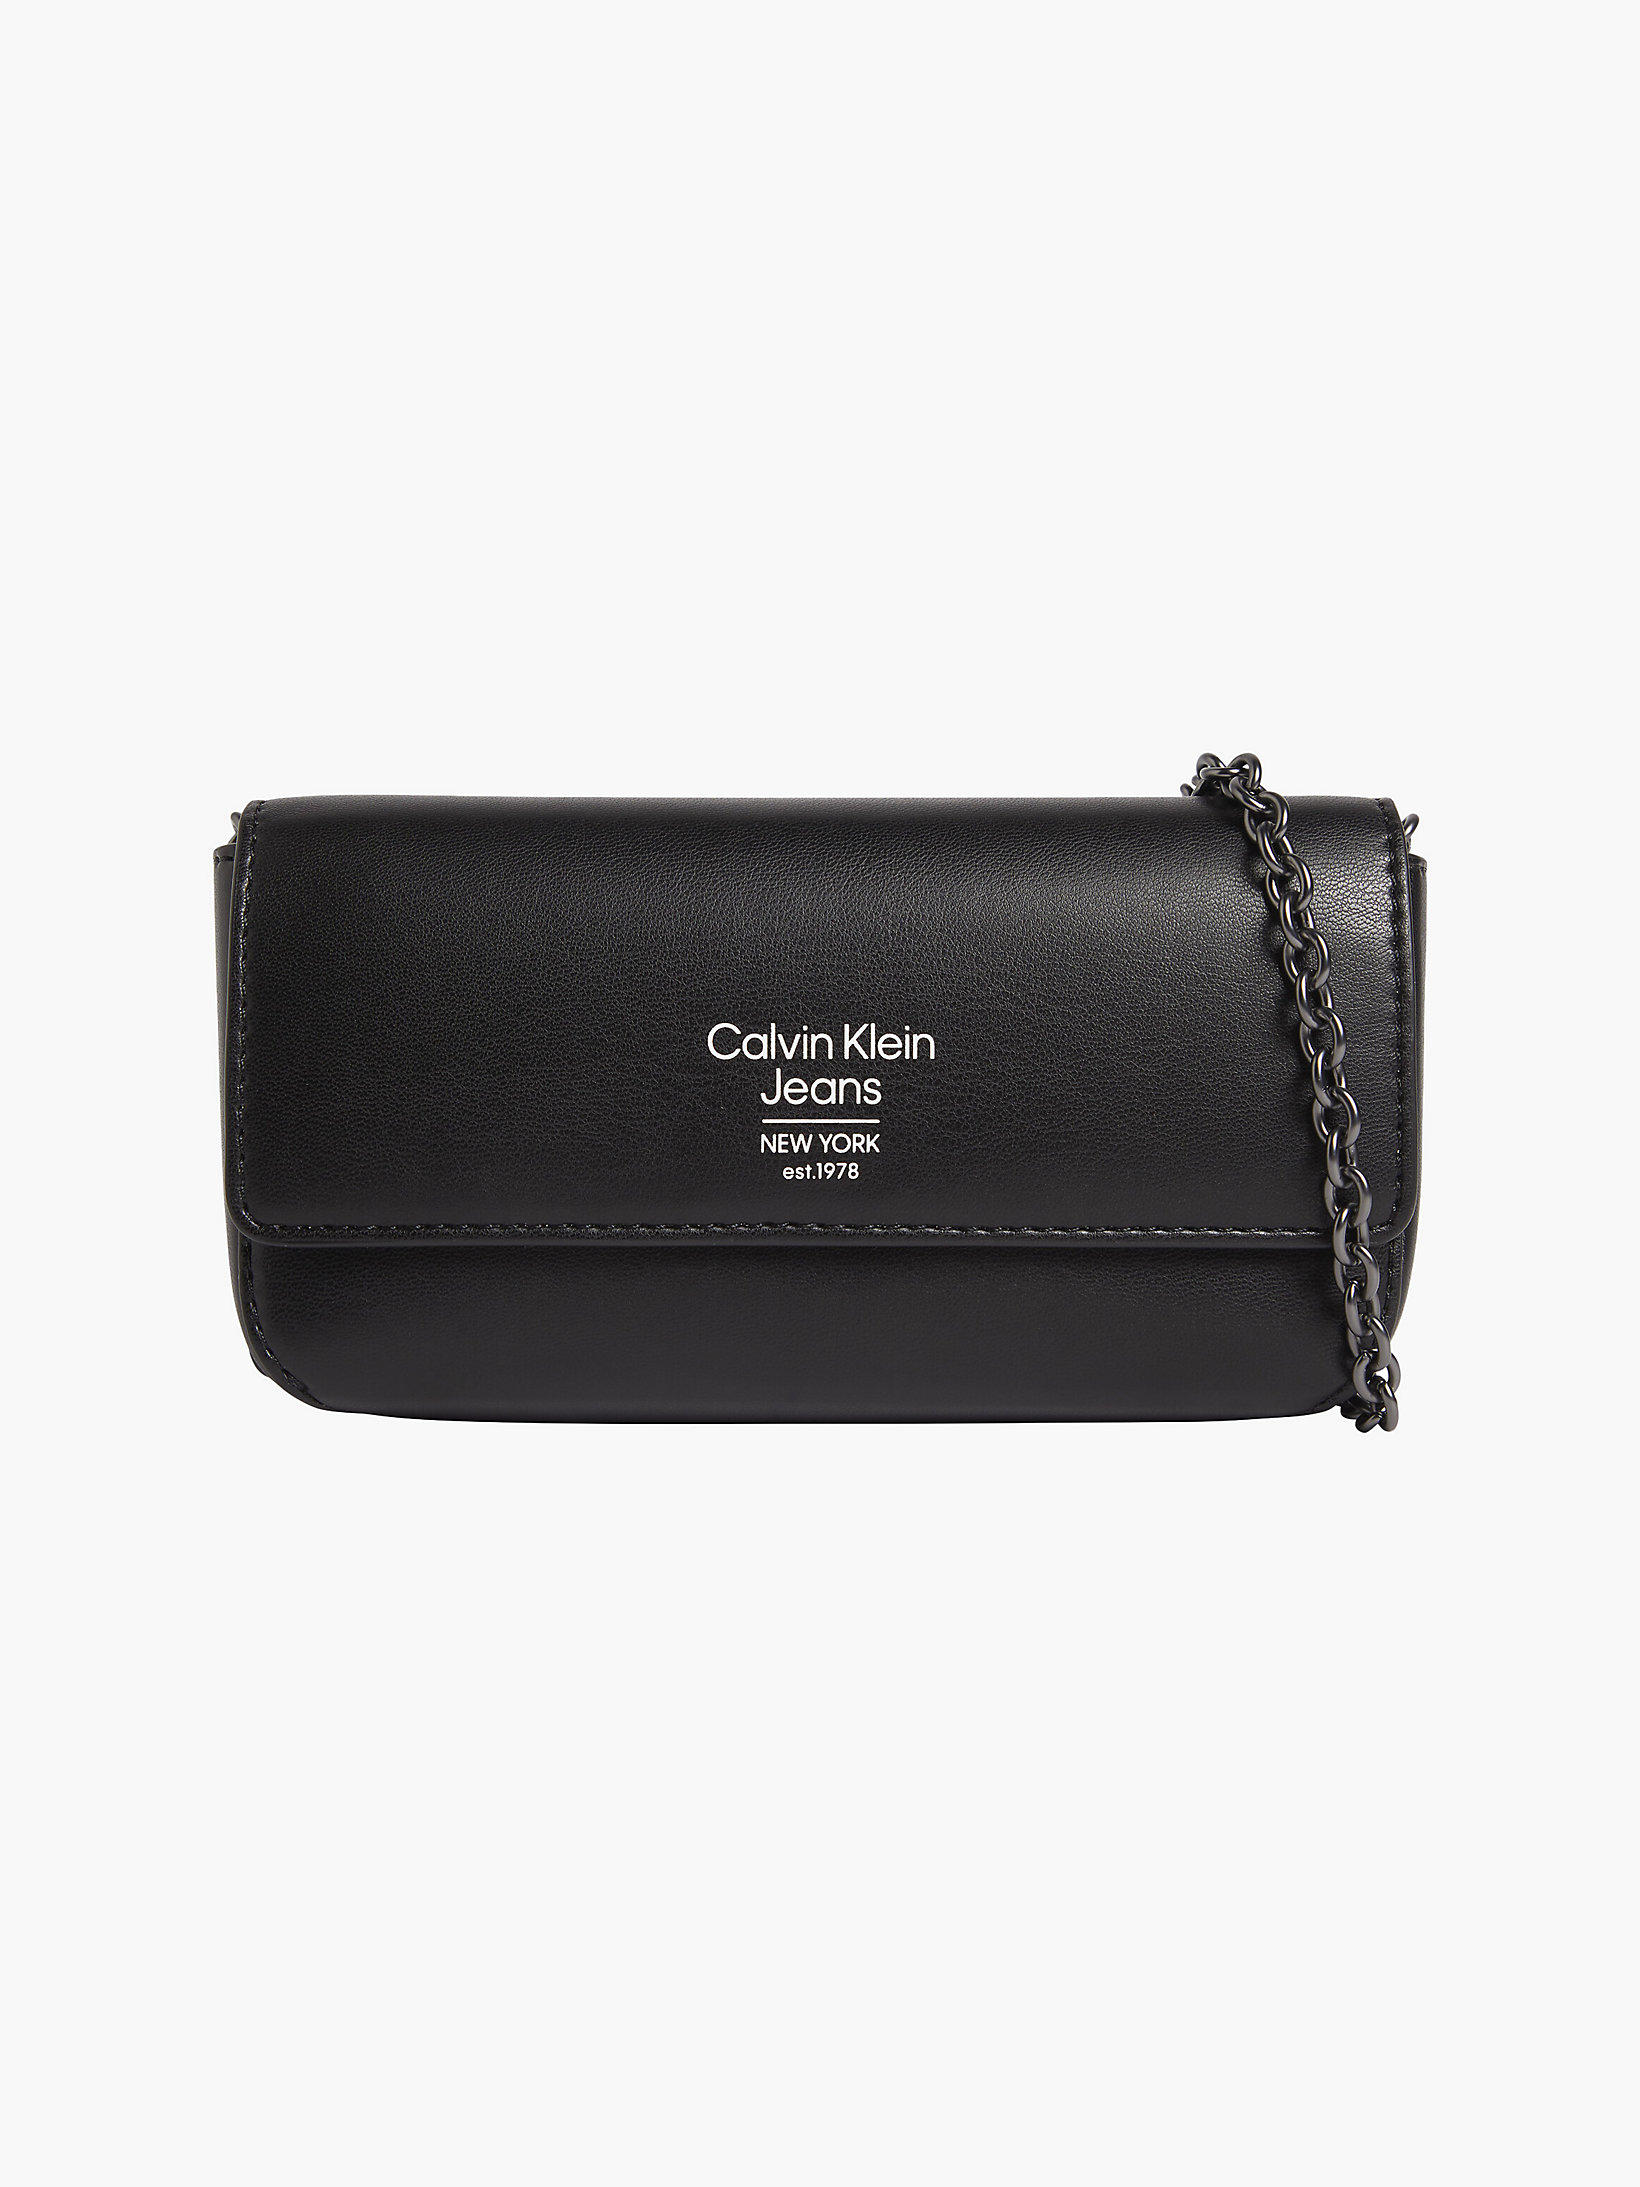 Black > Handy-Crossbody Bag > undefined Damen - Calvin Klein